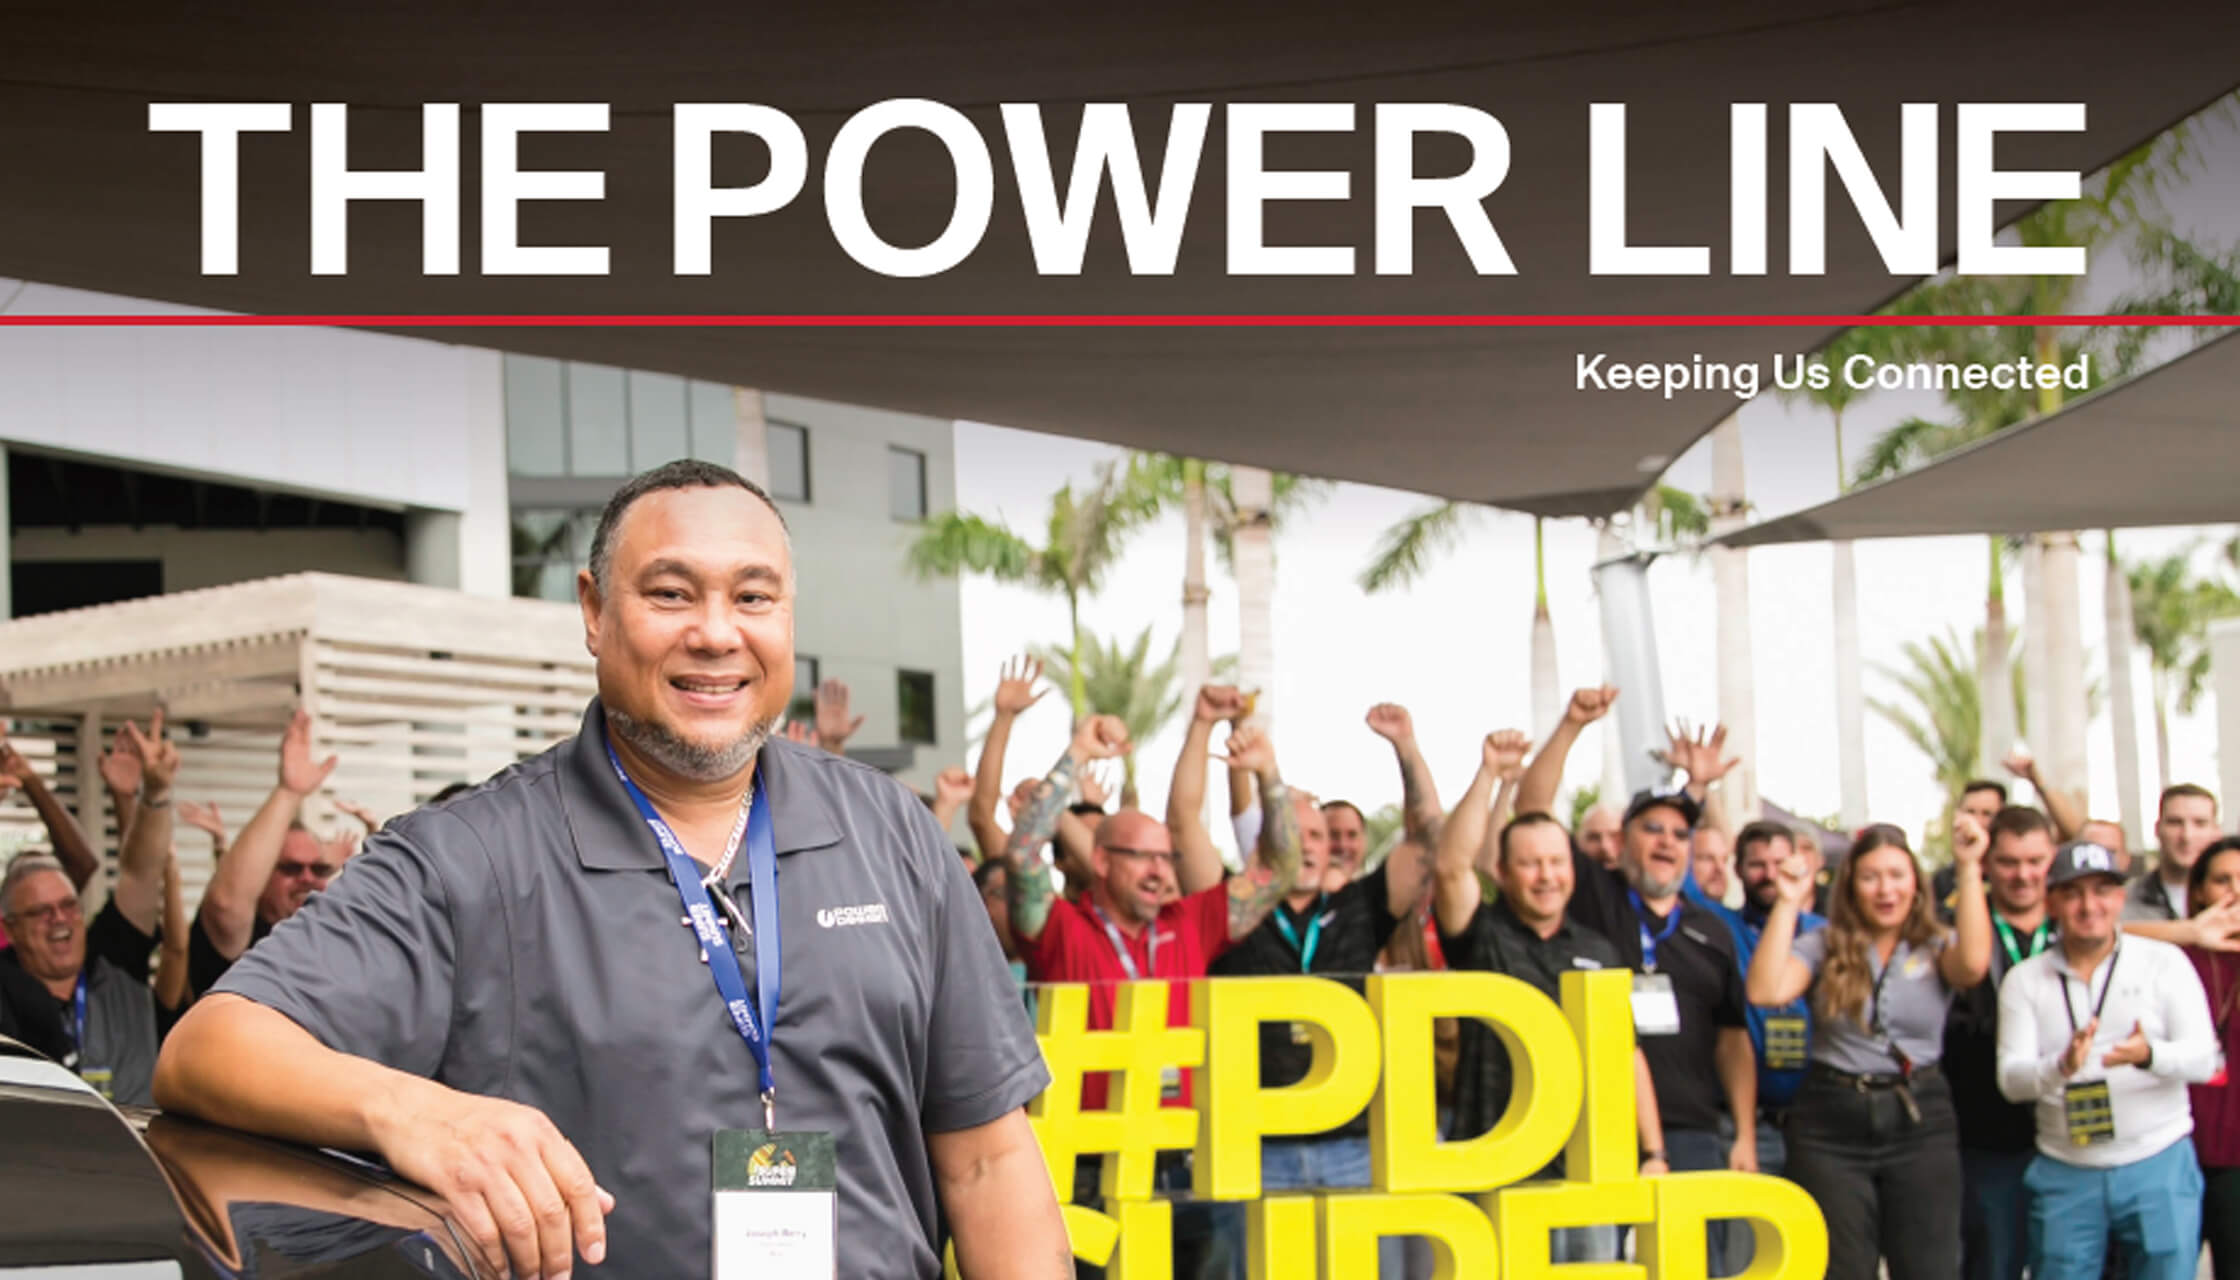 Power Line Newsletter Issue 4, 2019